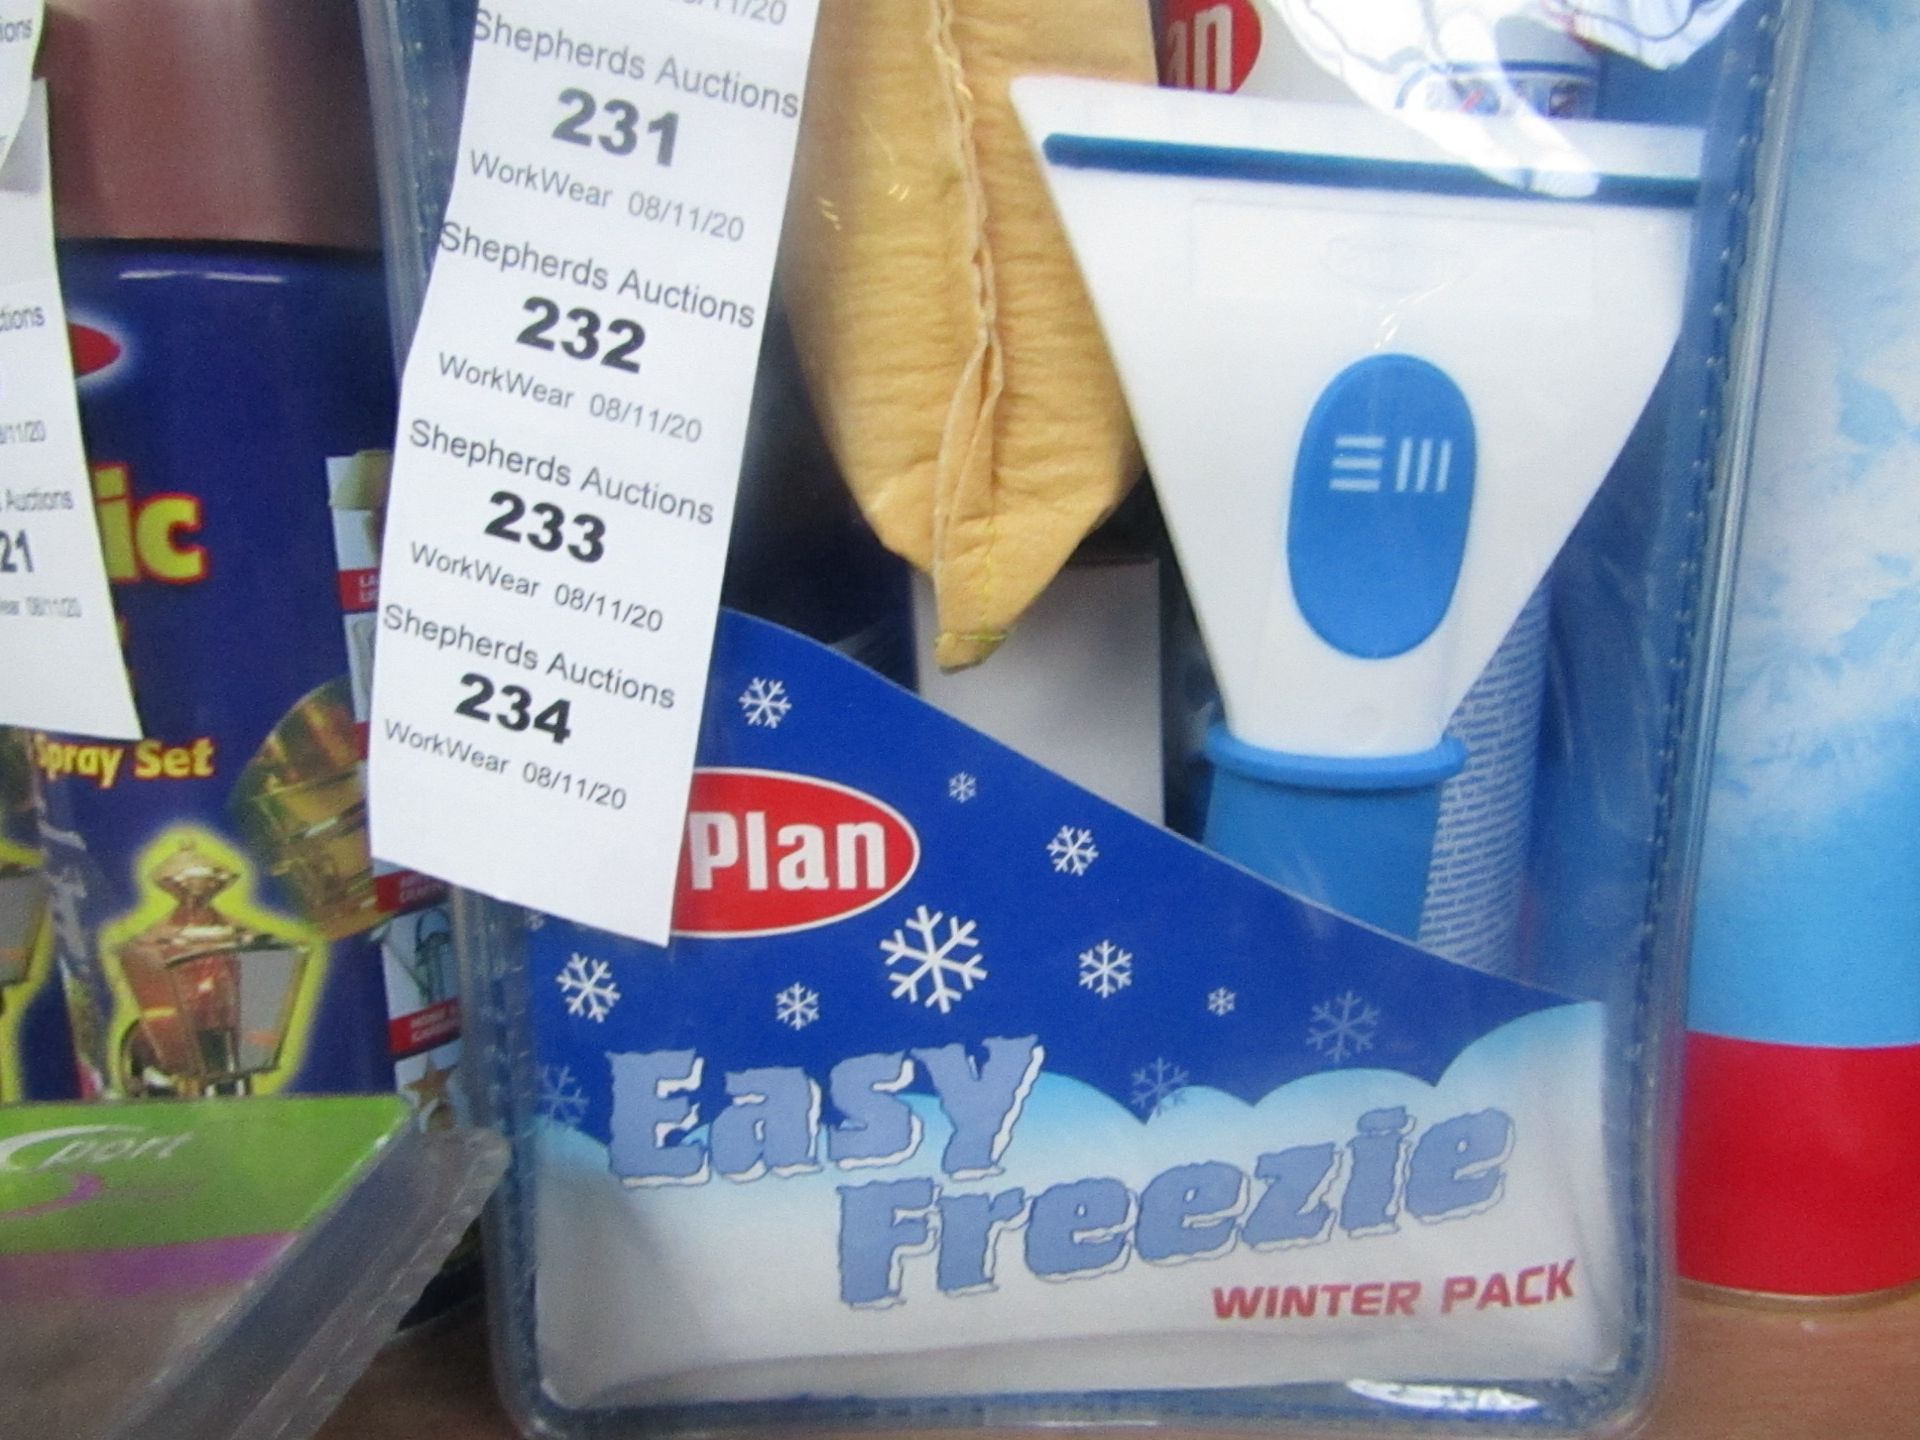 CarPlan - Easy Freezie Winter Pack - Includes : Screenwash 500ml, De-Icer 300ml, Easi-Grip Ice